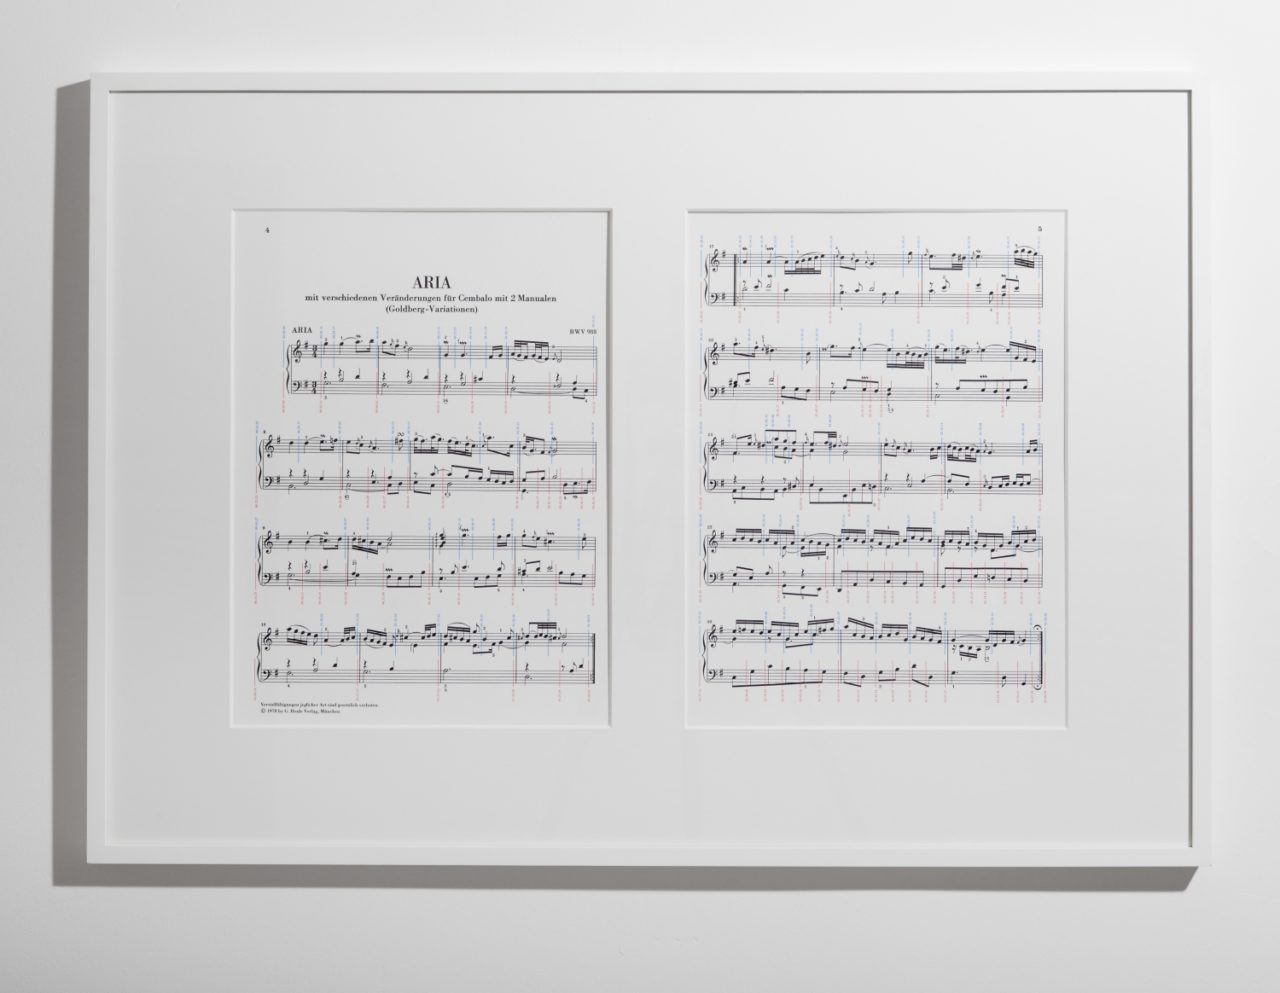 Tim Lee, The Goldberg Variations, Aria, BMV 988, 1741, Johann Sebastian Bach (Glenn Gould 1981), sheet music (2007)